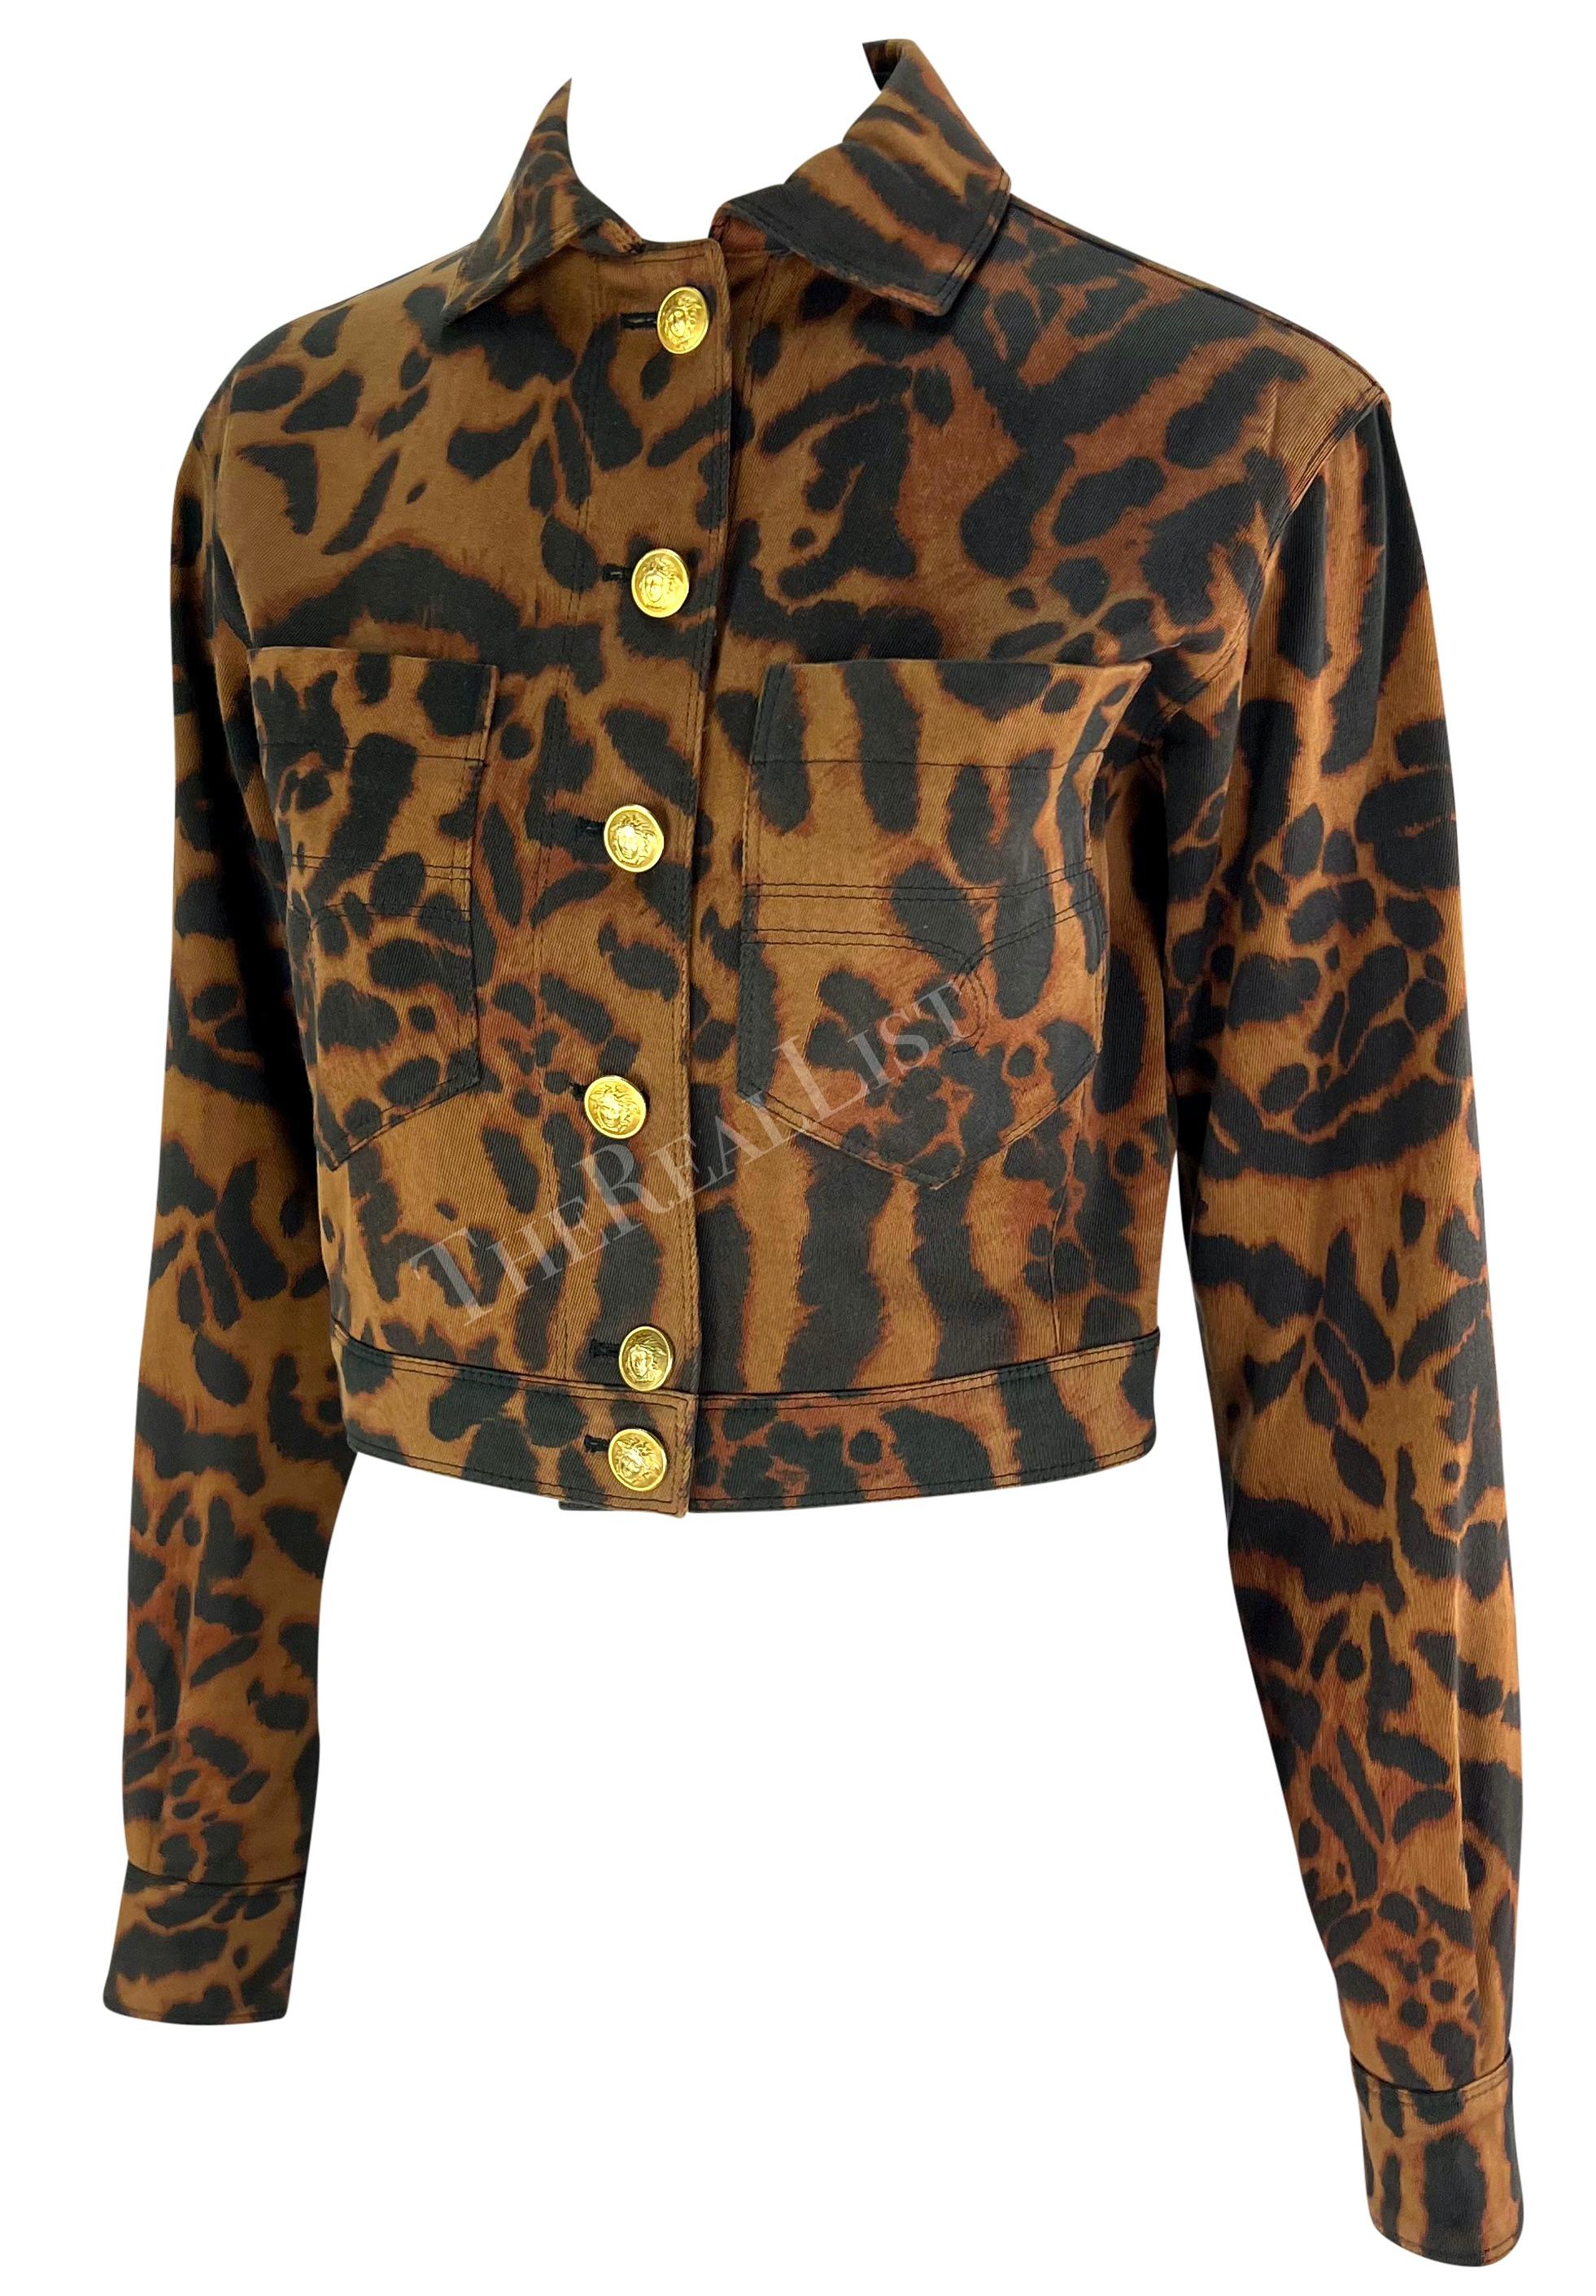 S/S 1992 Gianni Versace Runway Brown Cheetah Print Denim Medusa Cropped Jacket For Sale 2